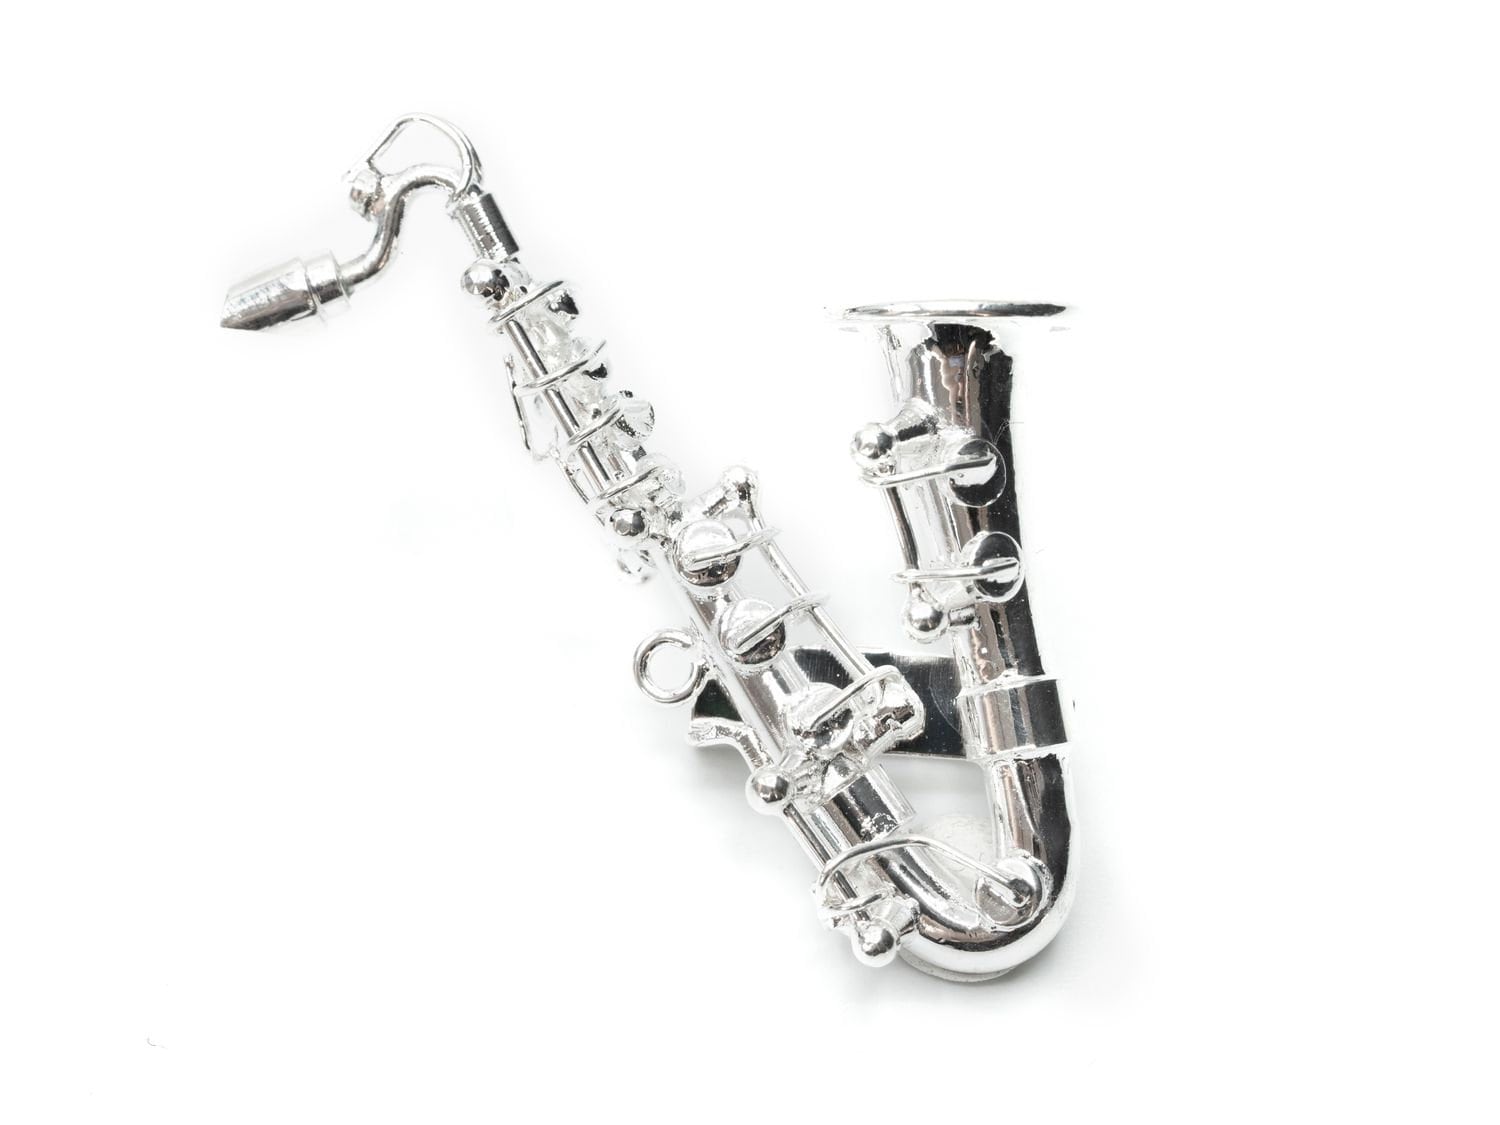 Saxofon Brosche Sax Saxofonbrosche Miniblings Saxophon Anstecknadel +Box Versilb von Miniblings